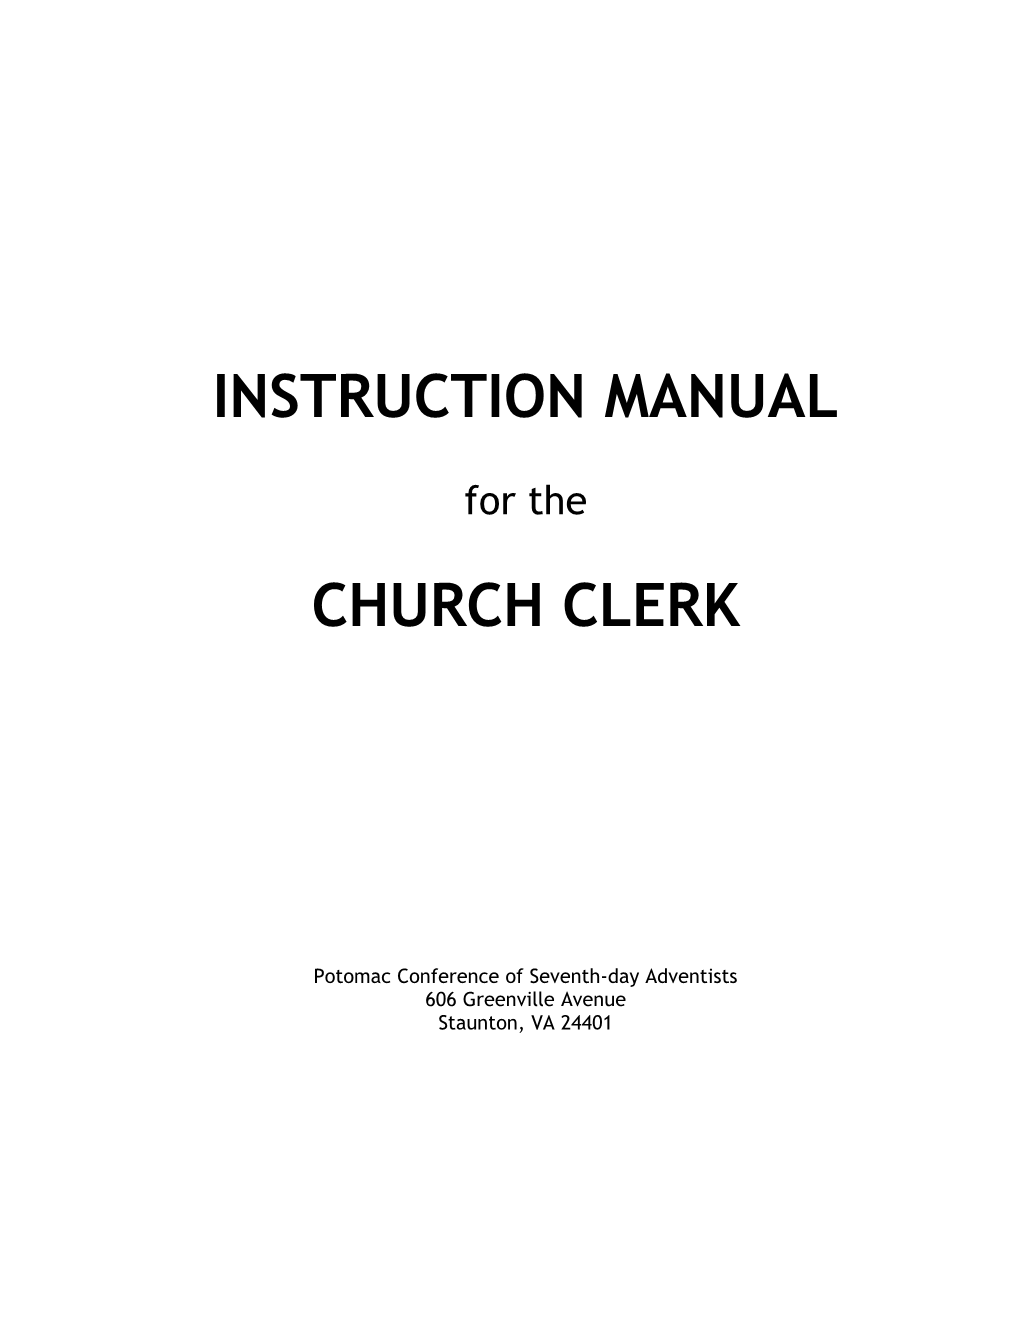 Role of the Church Clerk/Secretary